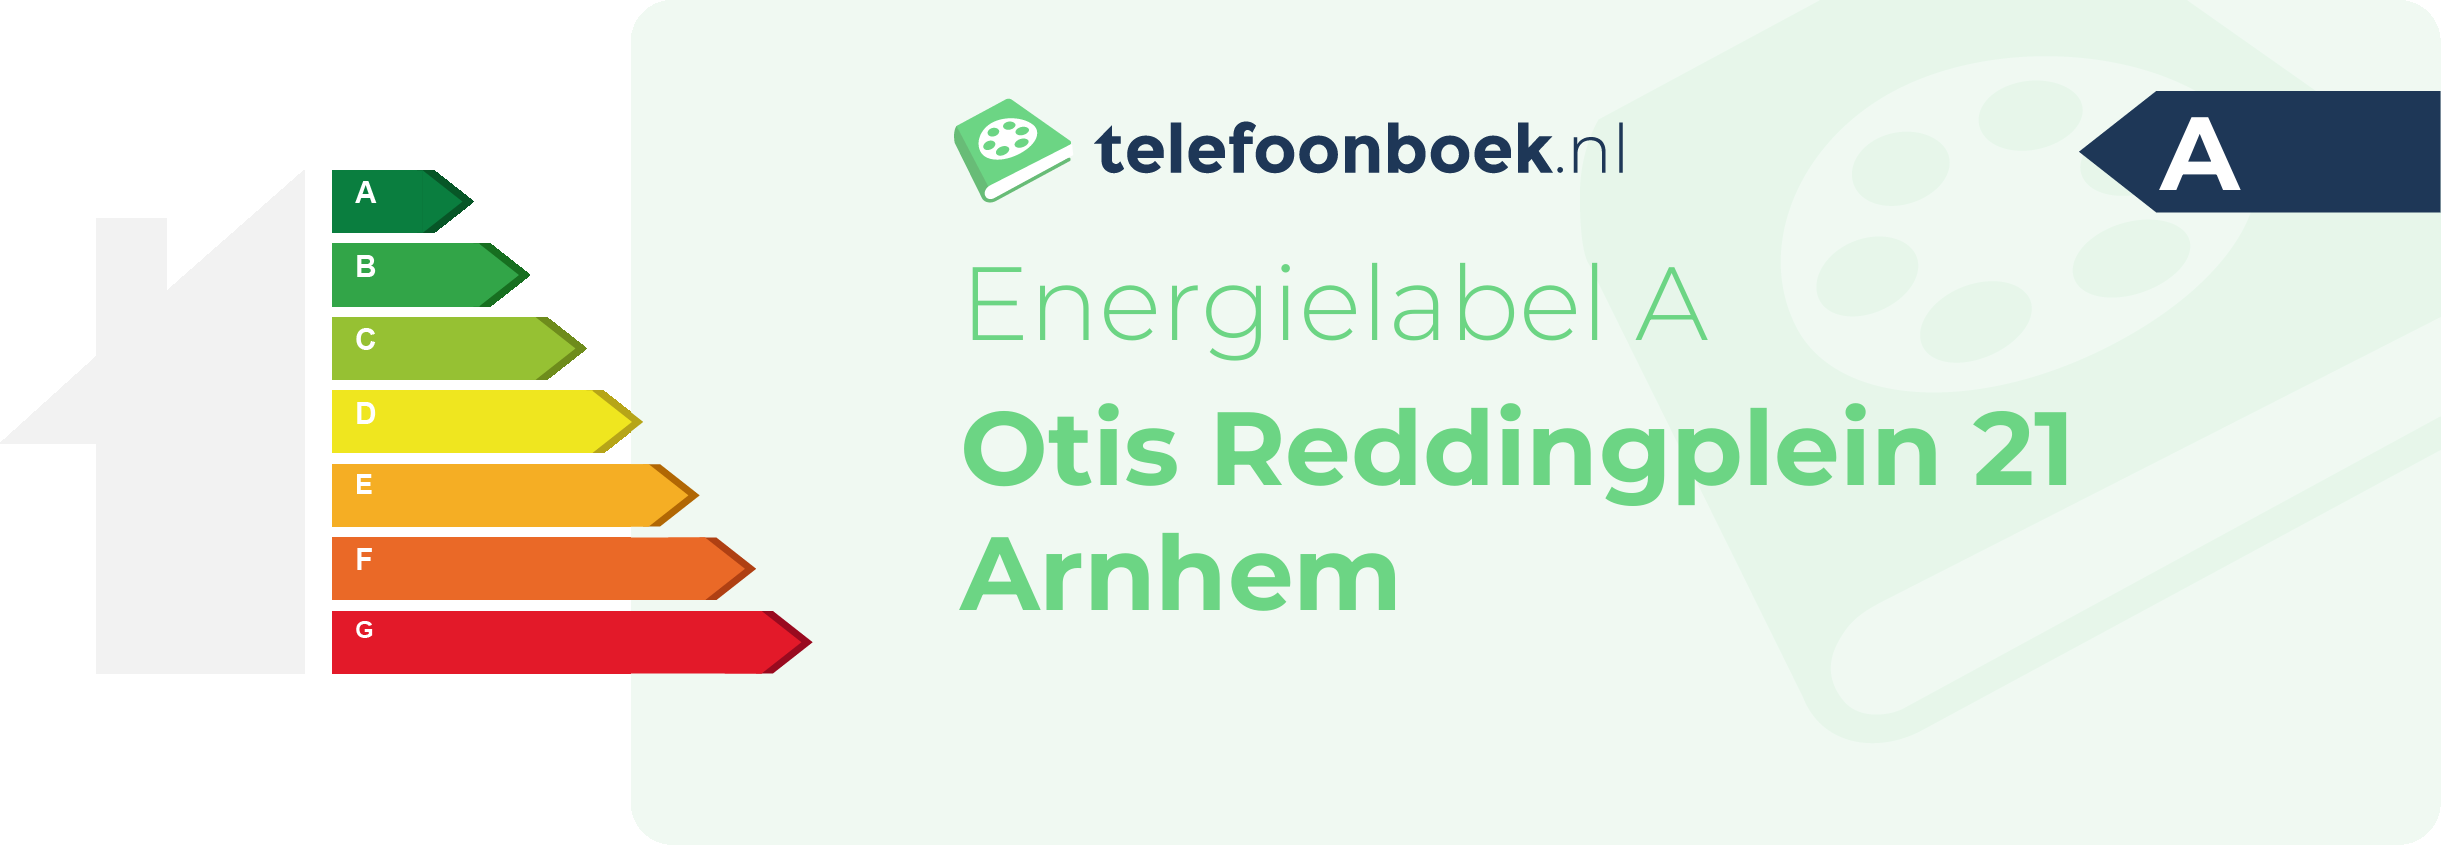 Energielabel Otis Reddingplein 21 Arnhem